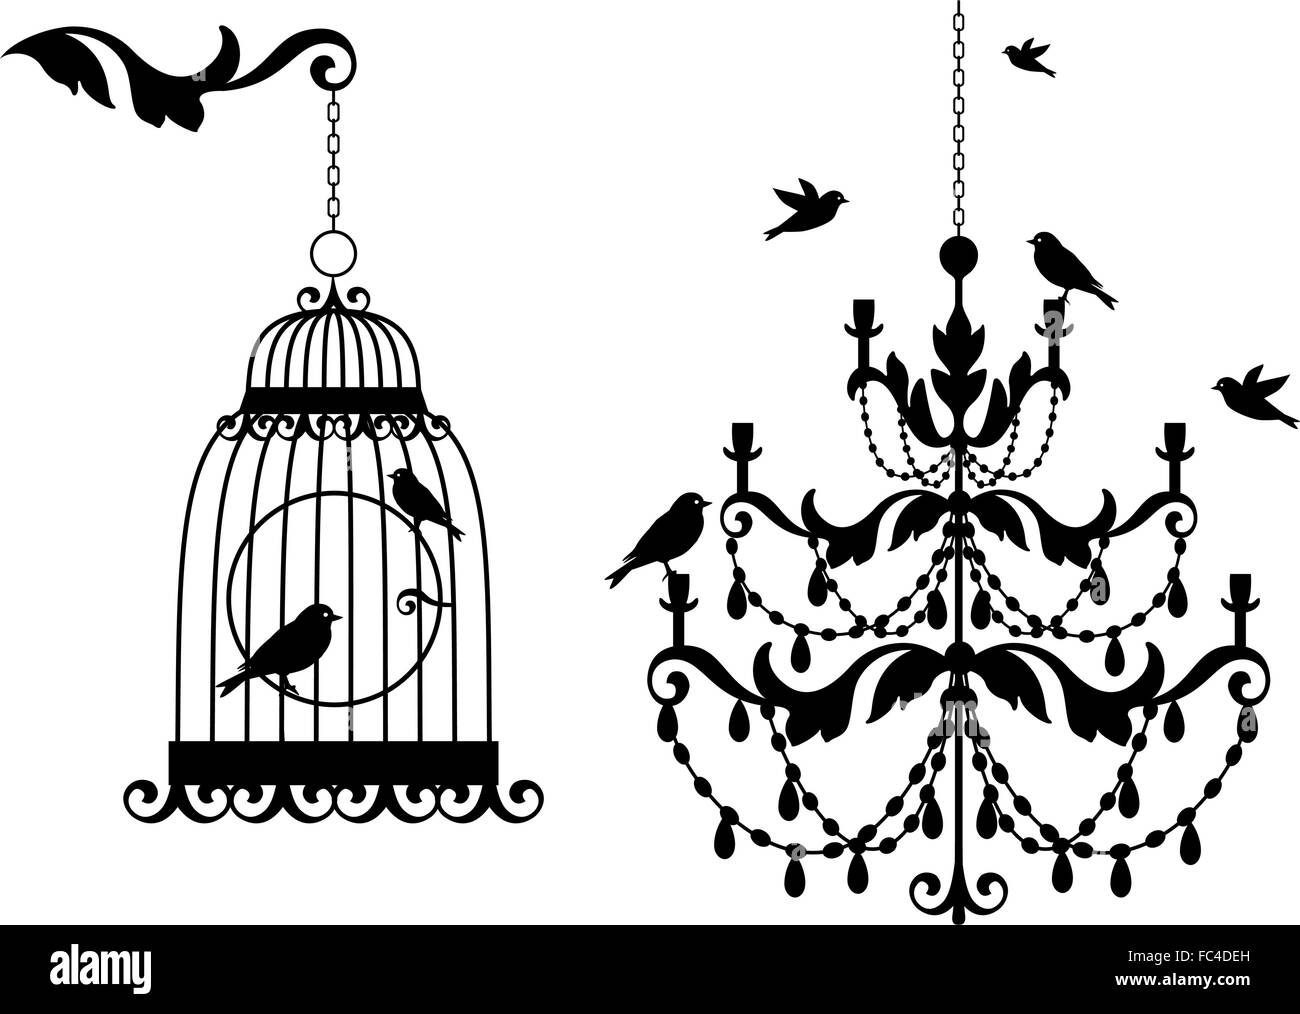 Vintage Kronleuchter und Vogelkäfig mit fliegenden Vögel, Vektor-illustration Stock Vektor